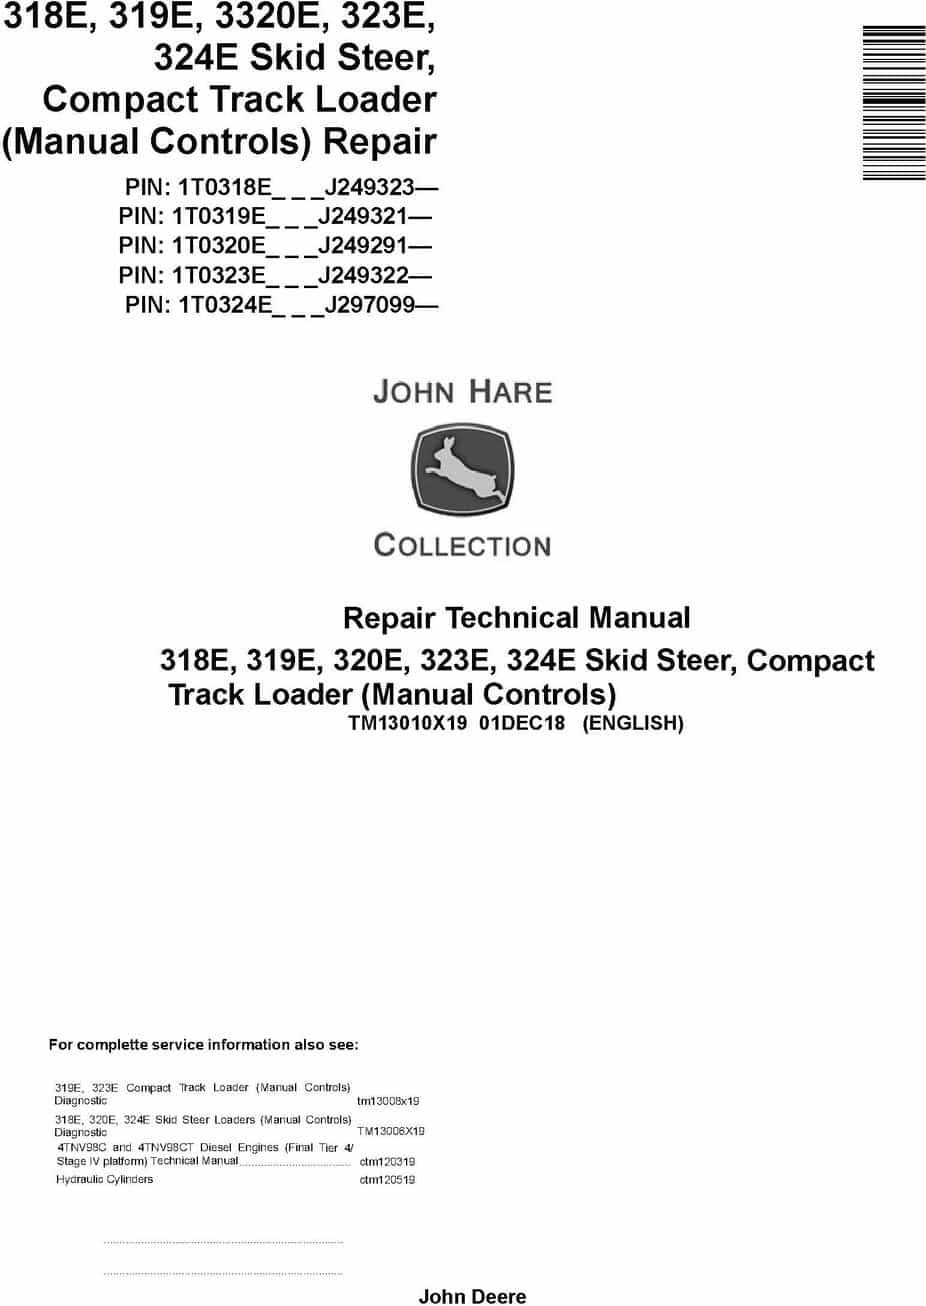 John Deere 318E 319E 320E 323E 324E Skid Steer Compact Track Loader Repair Technical Manual TM13010X19